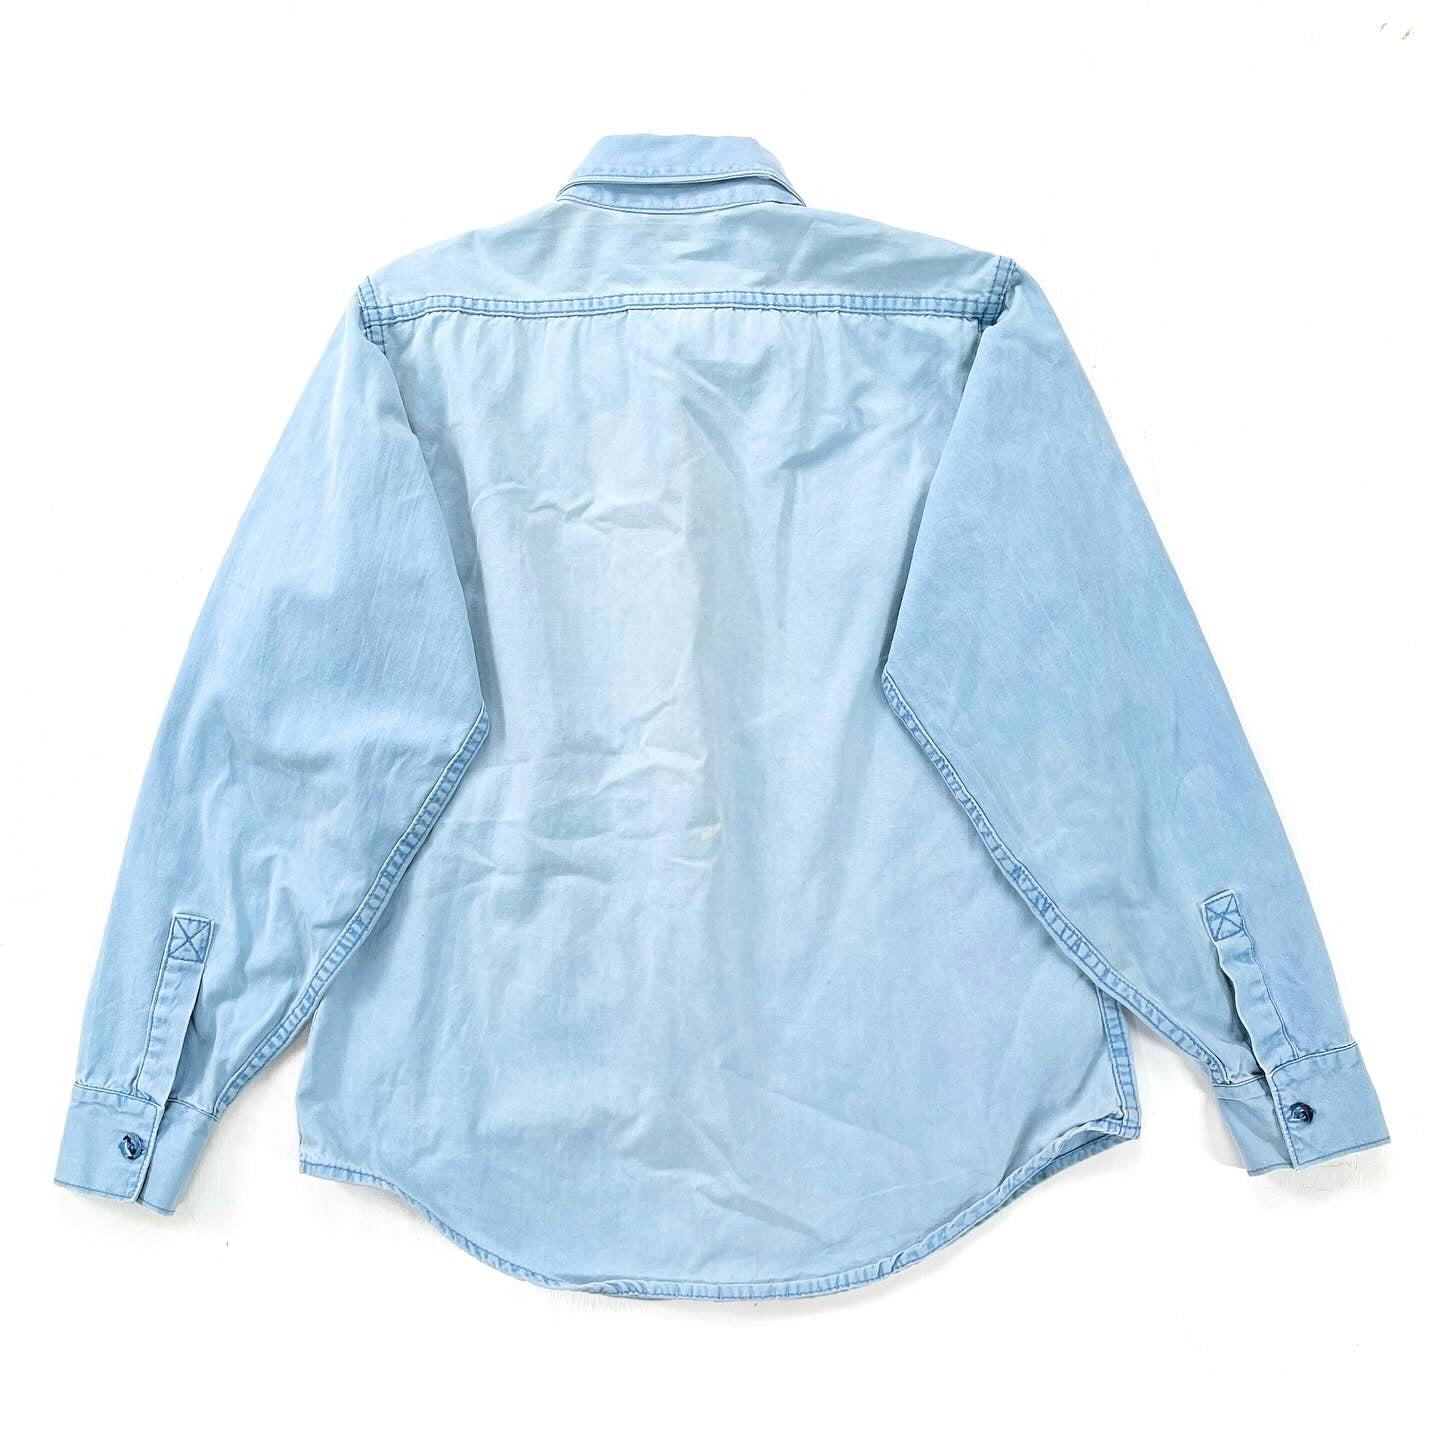 1970s Patagonia “Big Label” Cotton Canvas Shirt, Light Blue (S/M)